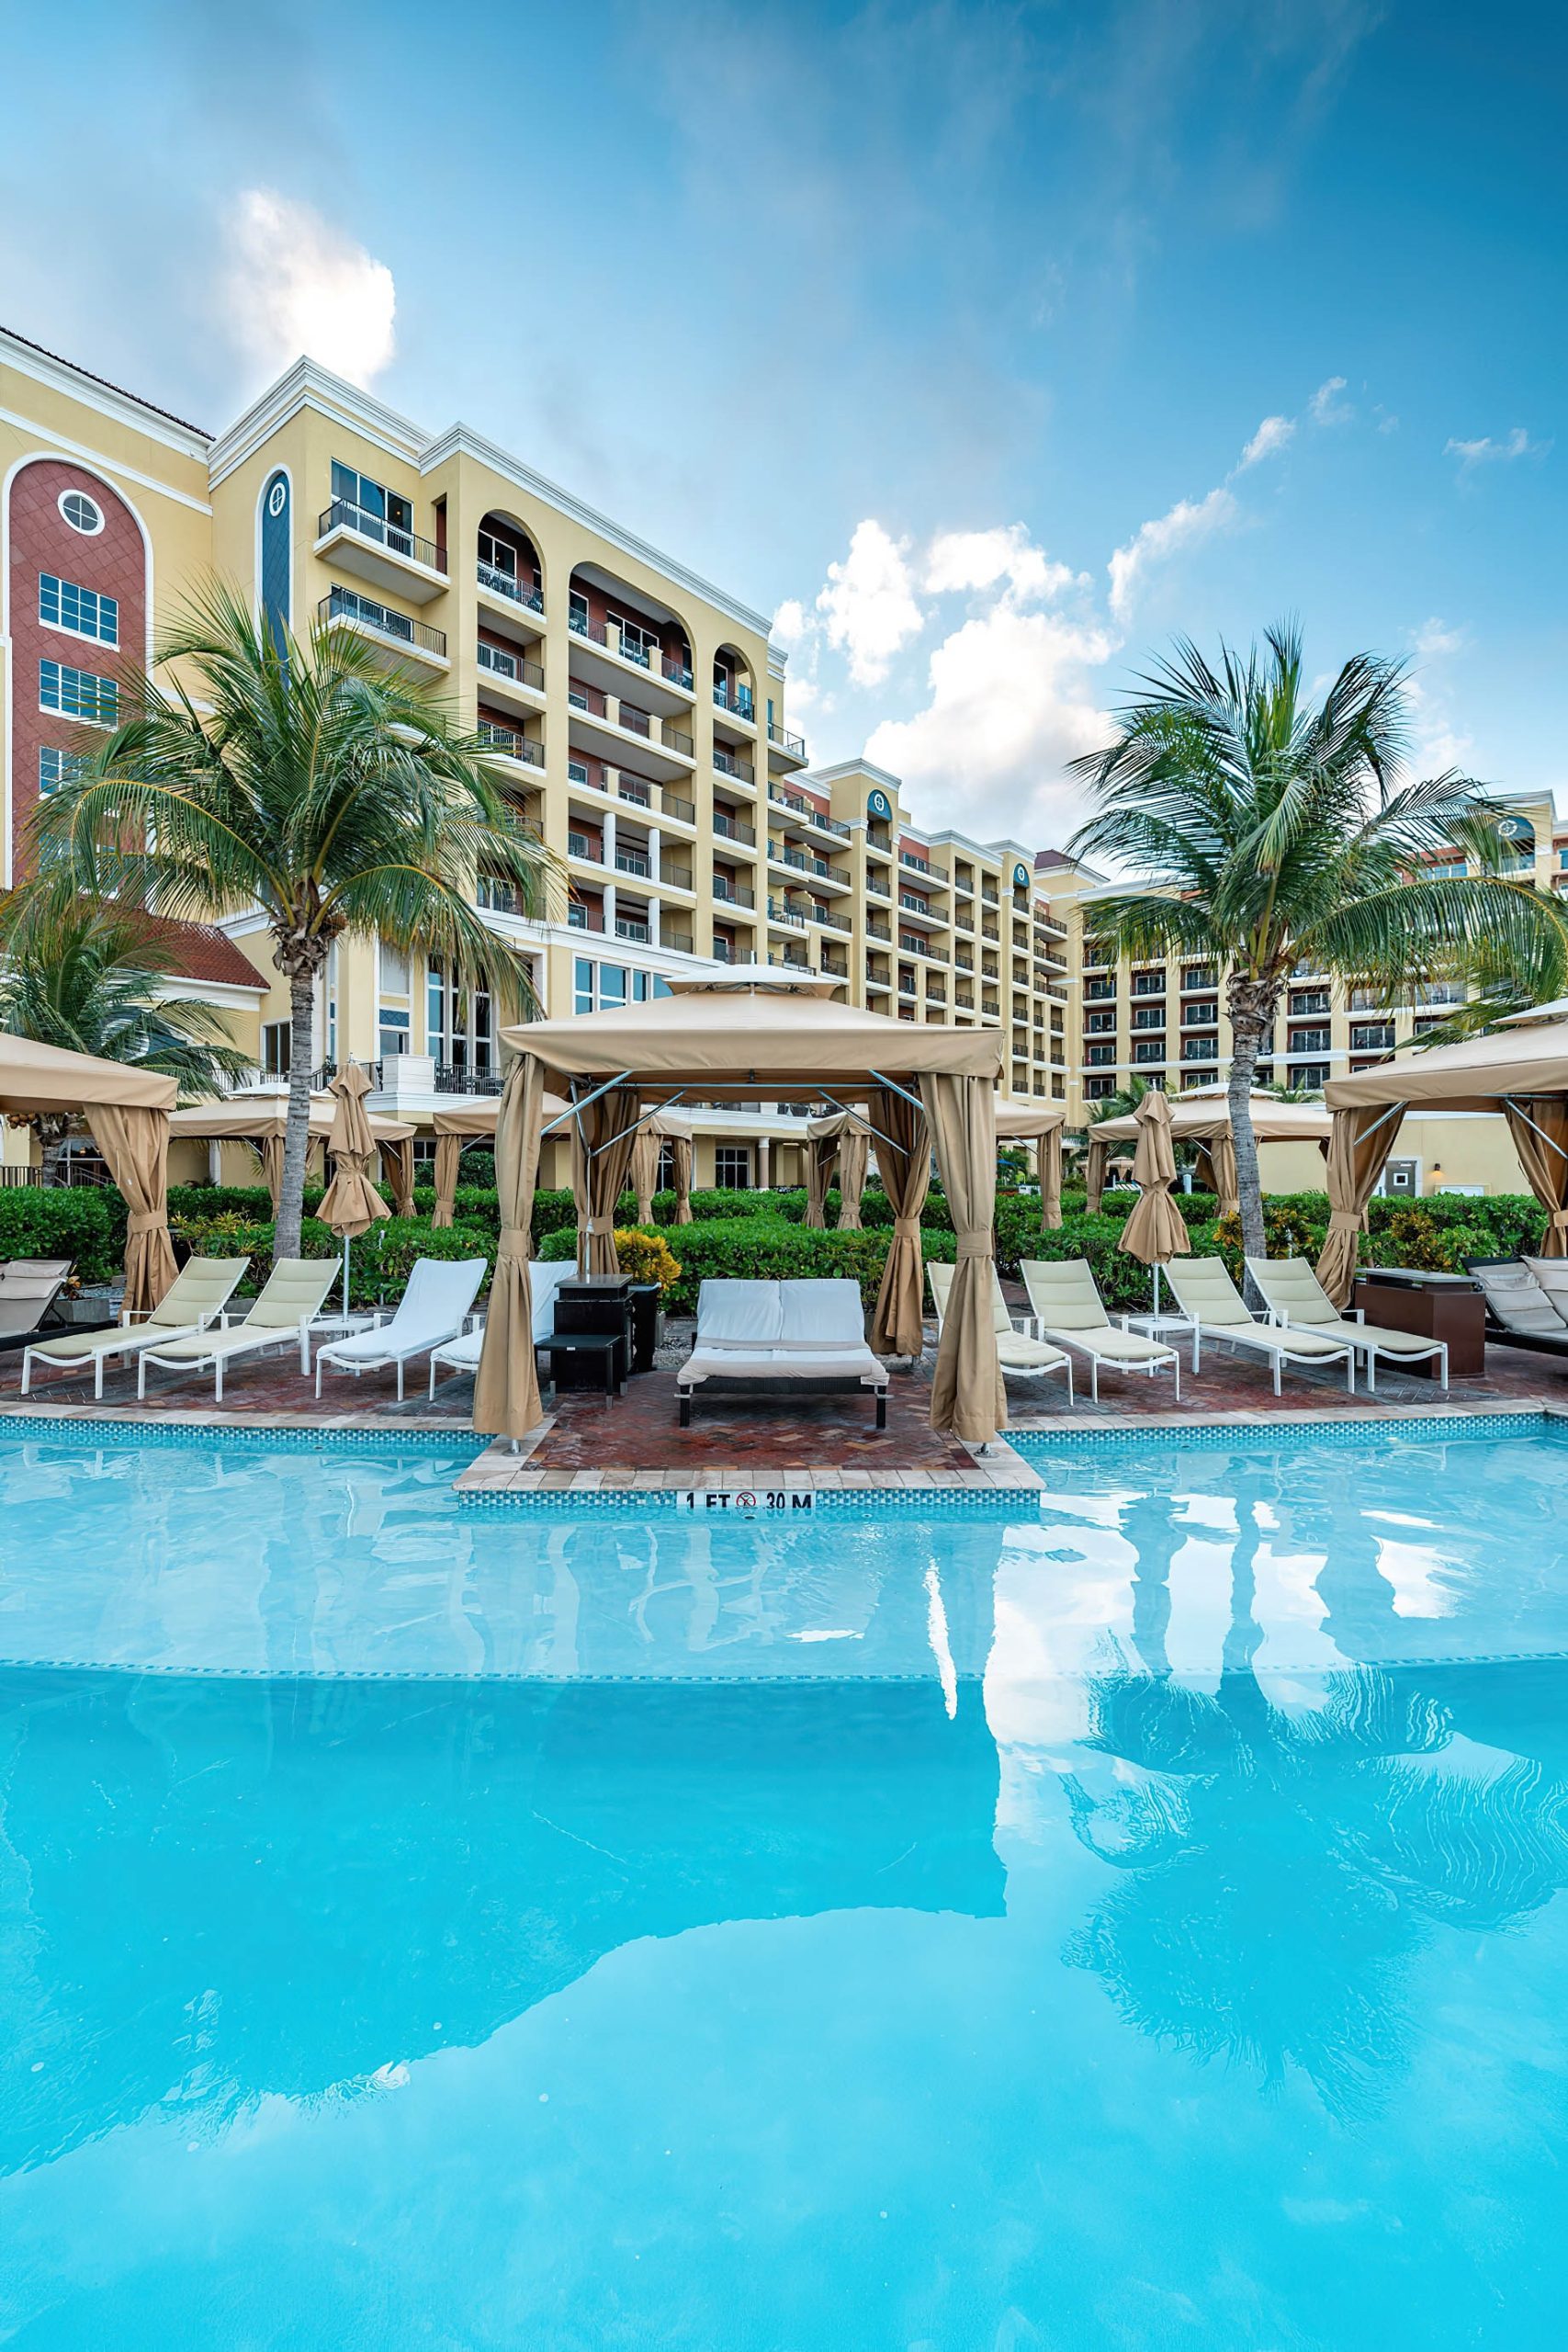 The Ritz-Carlton, Aruba Resort – Palm Beach, Aruba – Pool Cabanas